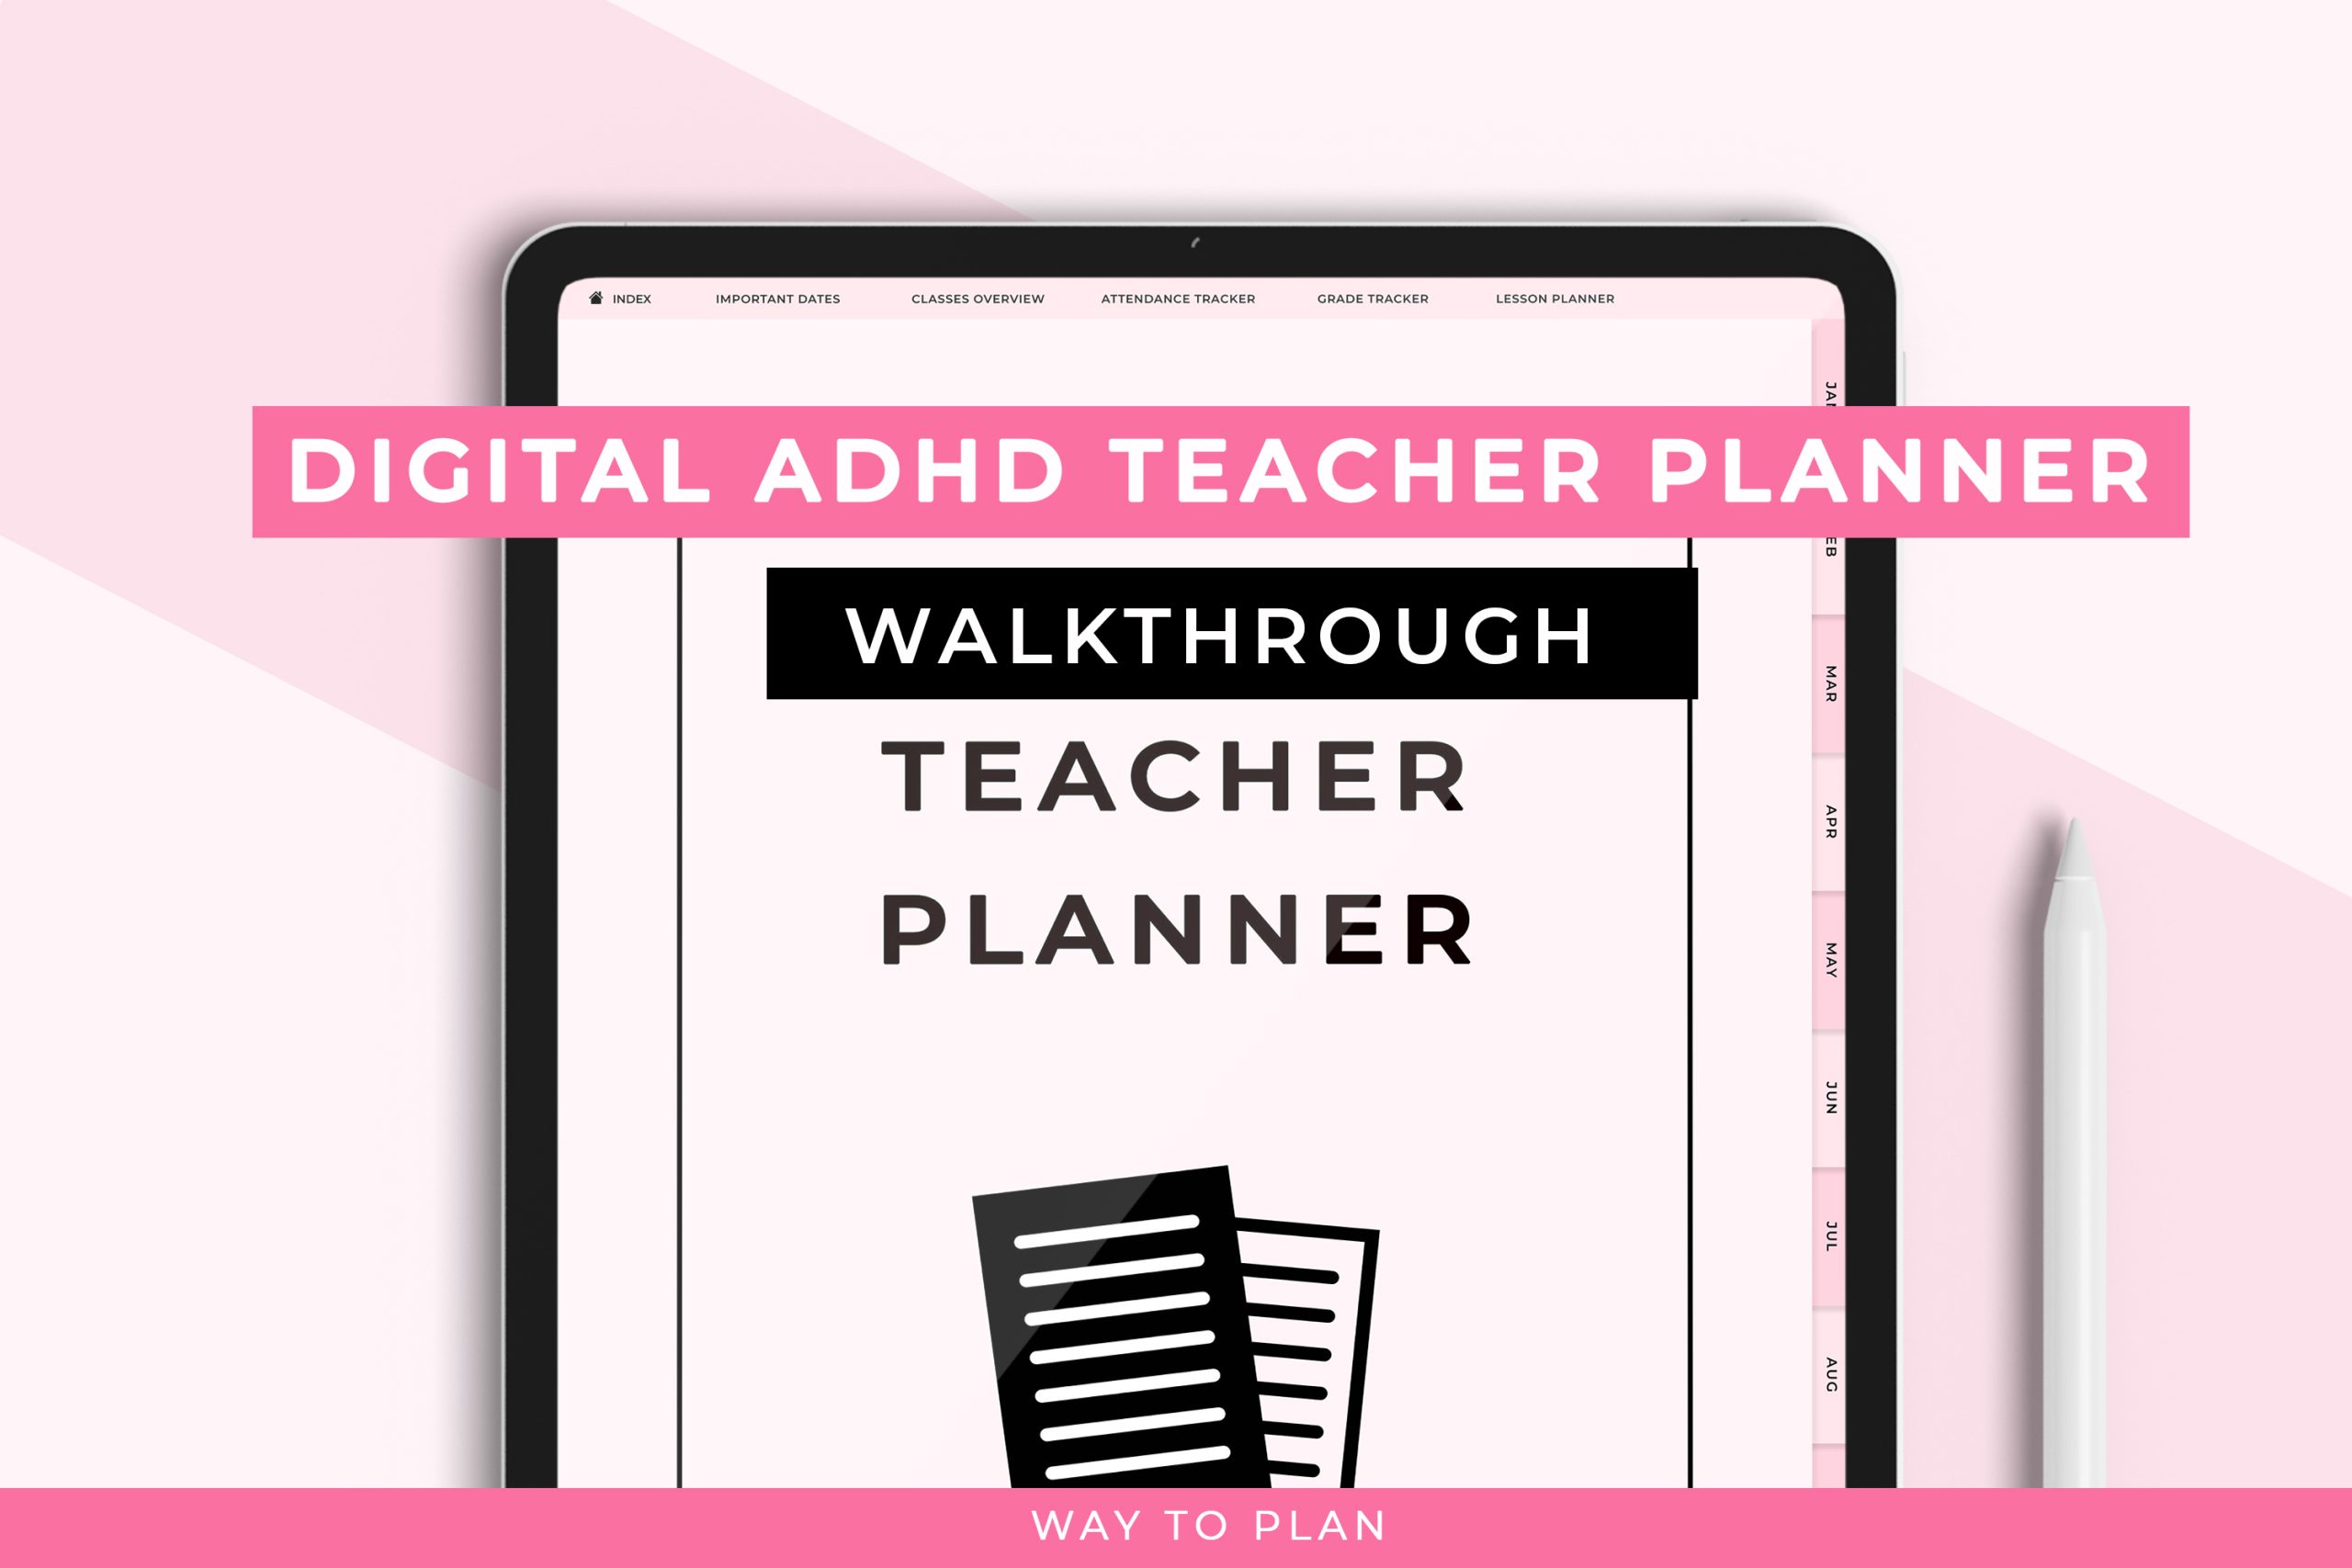 Digital ADHD Teacher Planner walkthrough